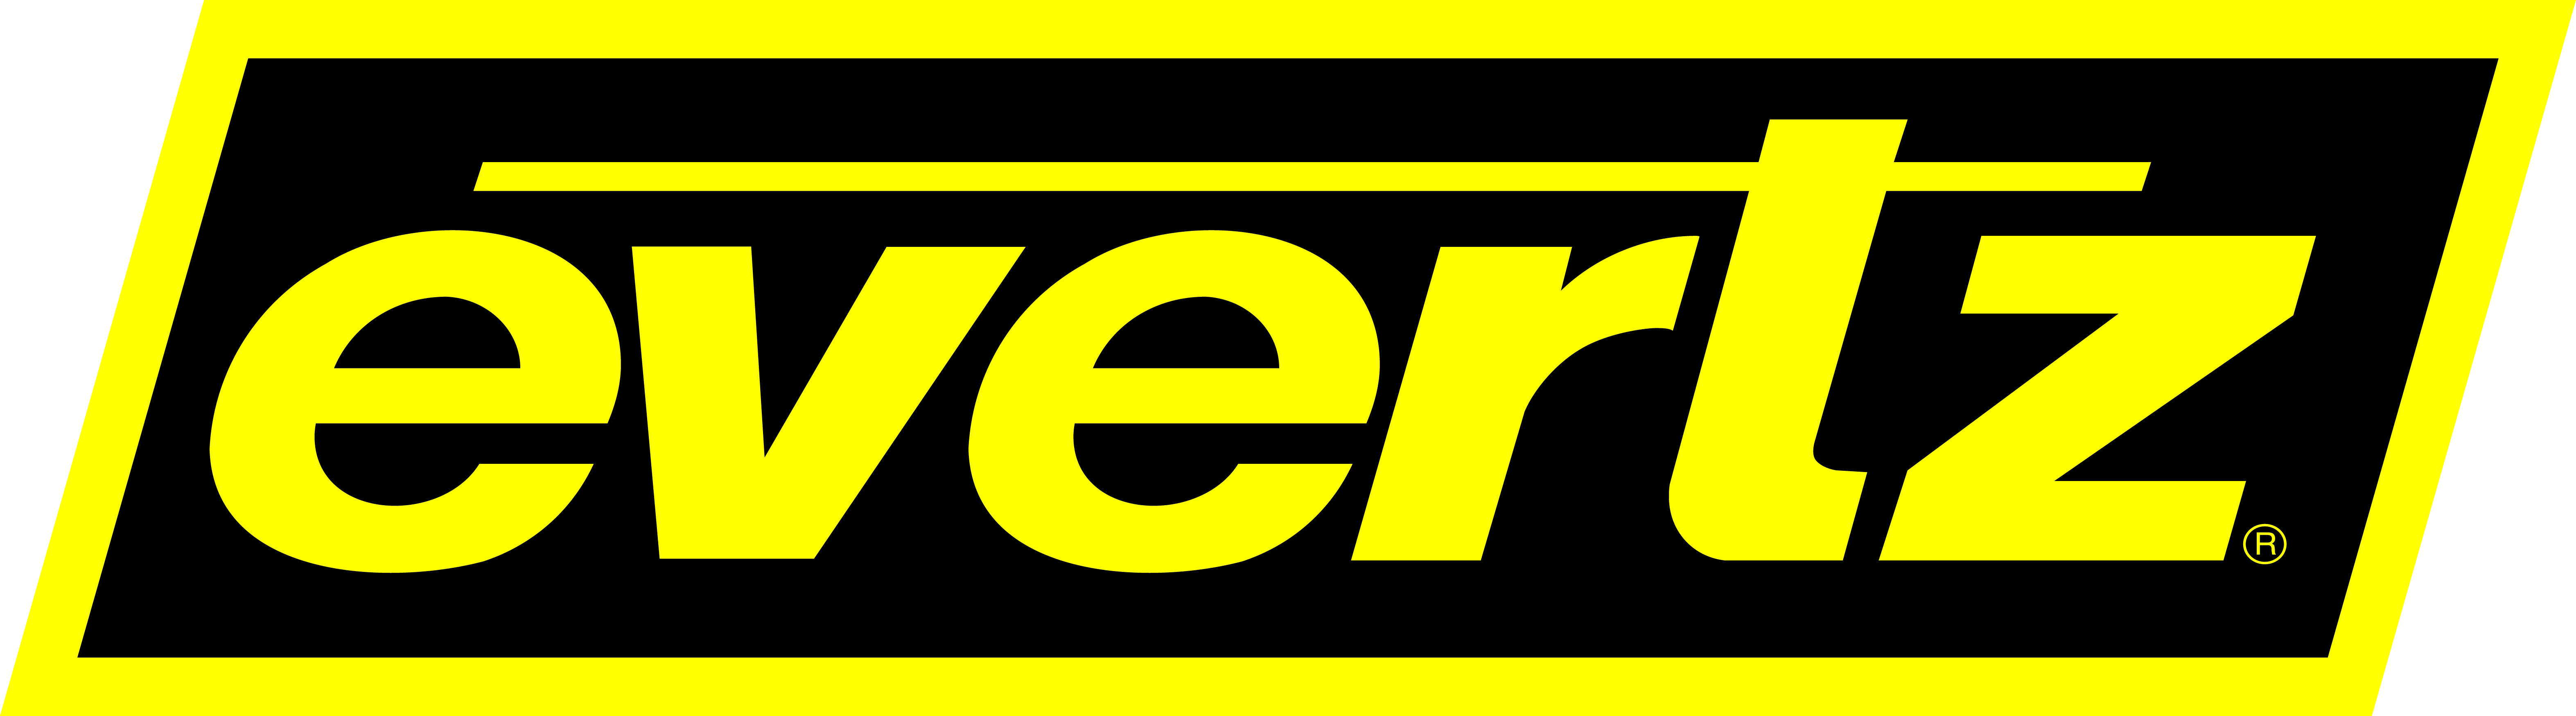 Evertz Logo - Ross and Evertz announce collaboration to put ASPEN 10GE IP